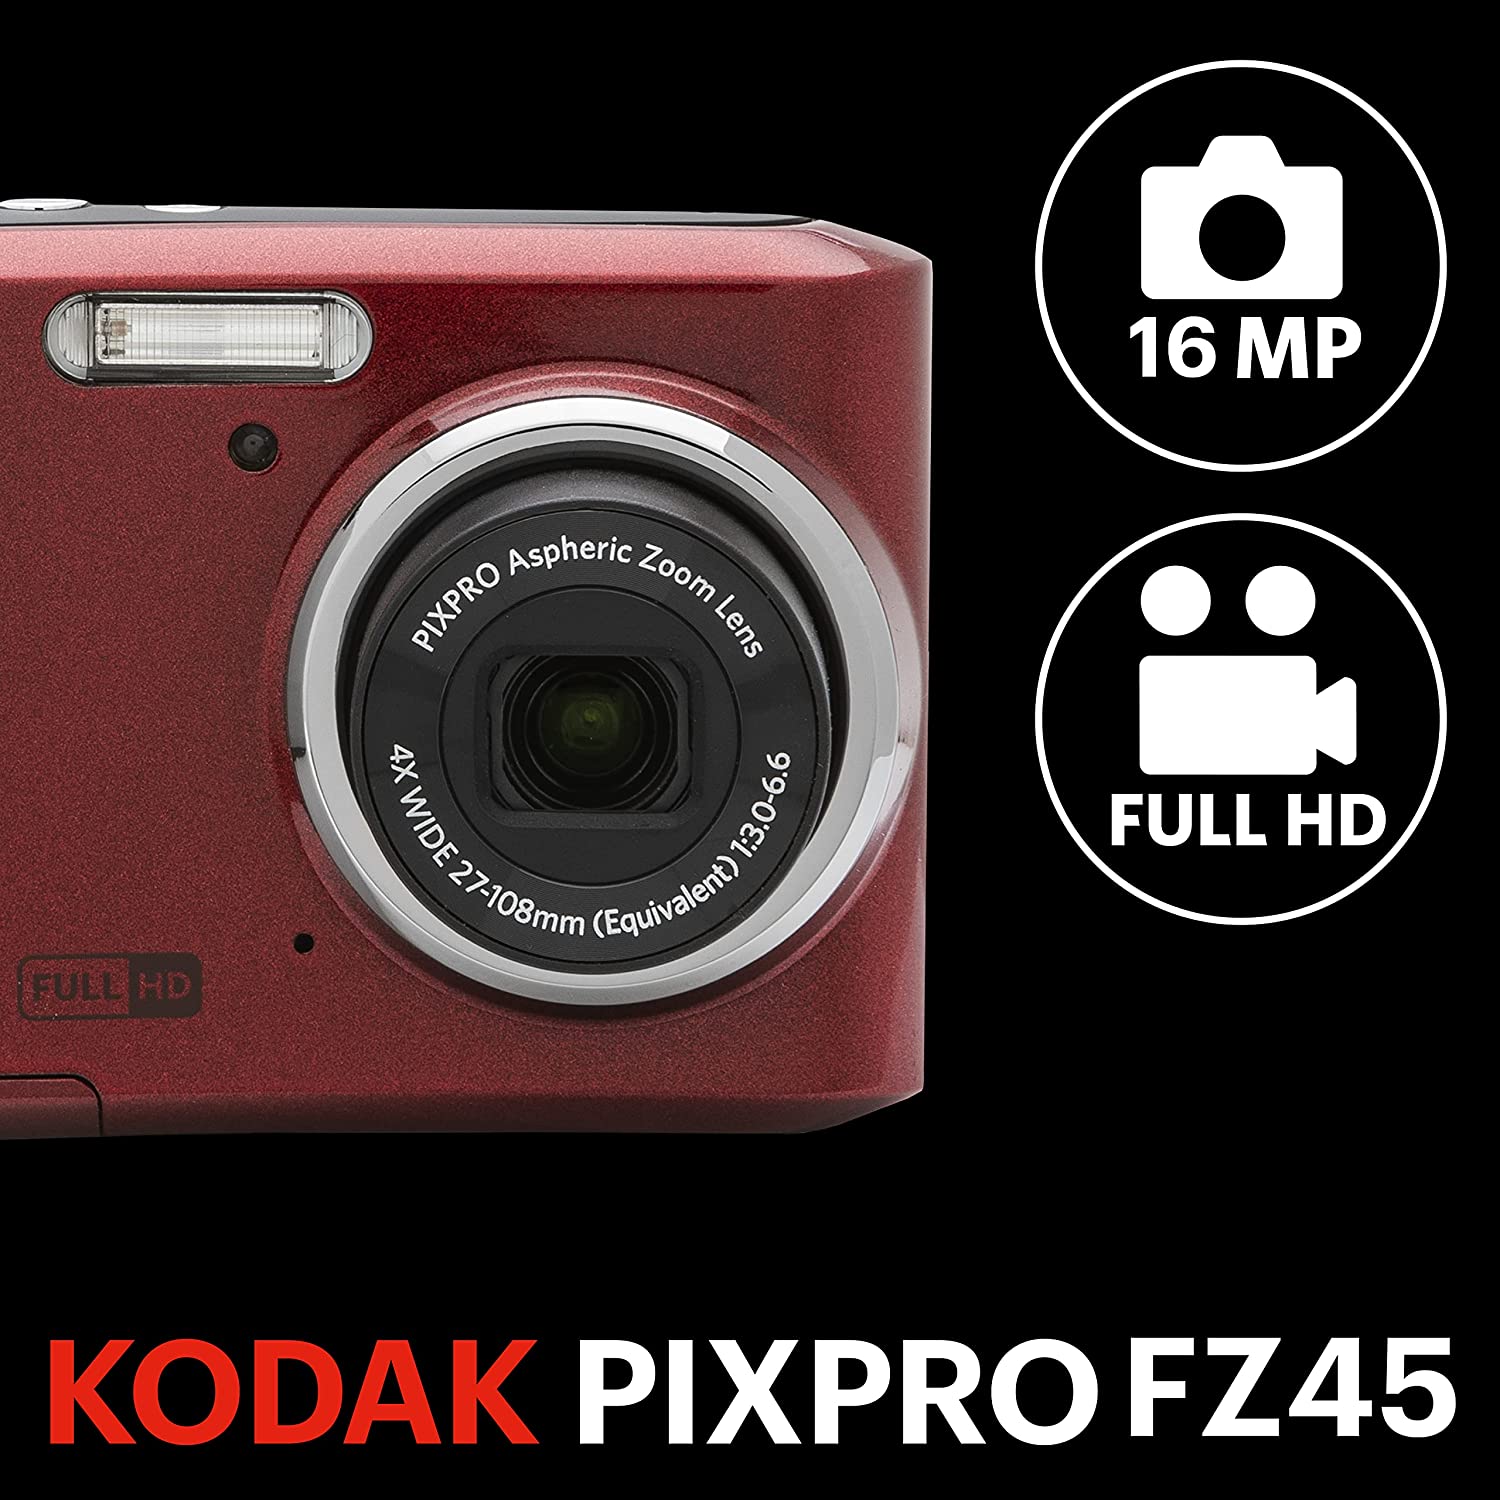 Kodak PIXPRO FZ45 16MP Digital Camera - Red